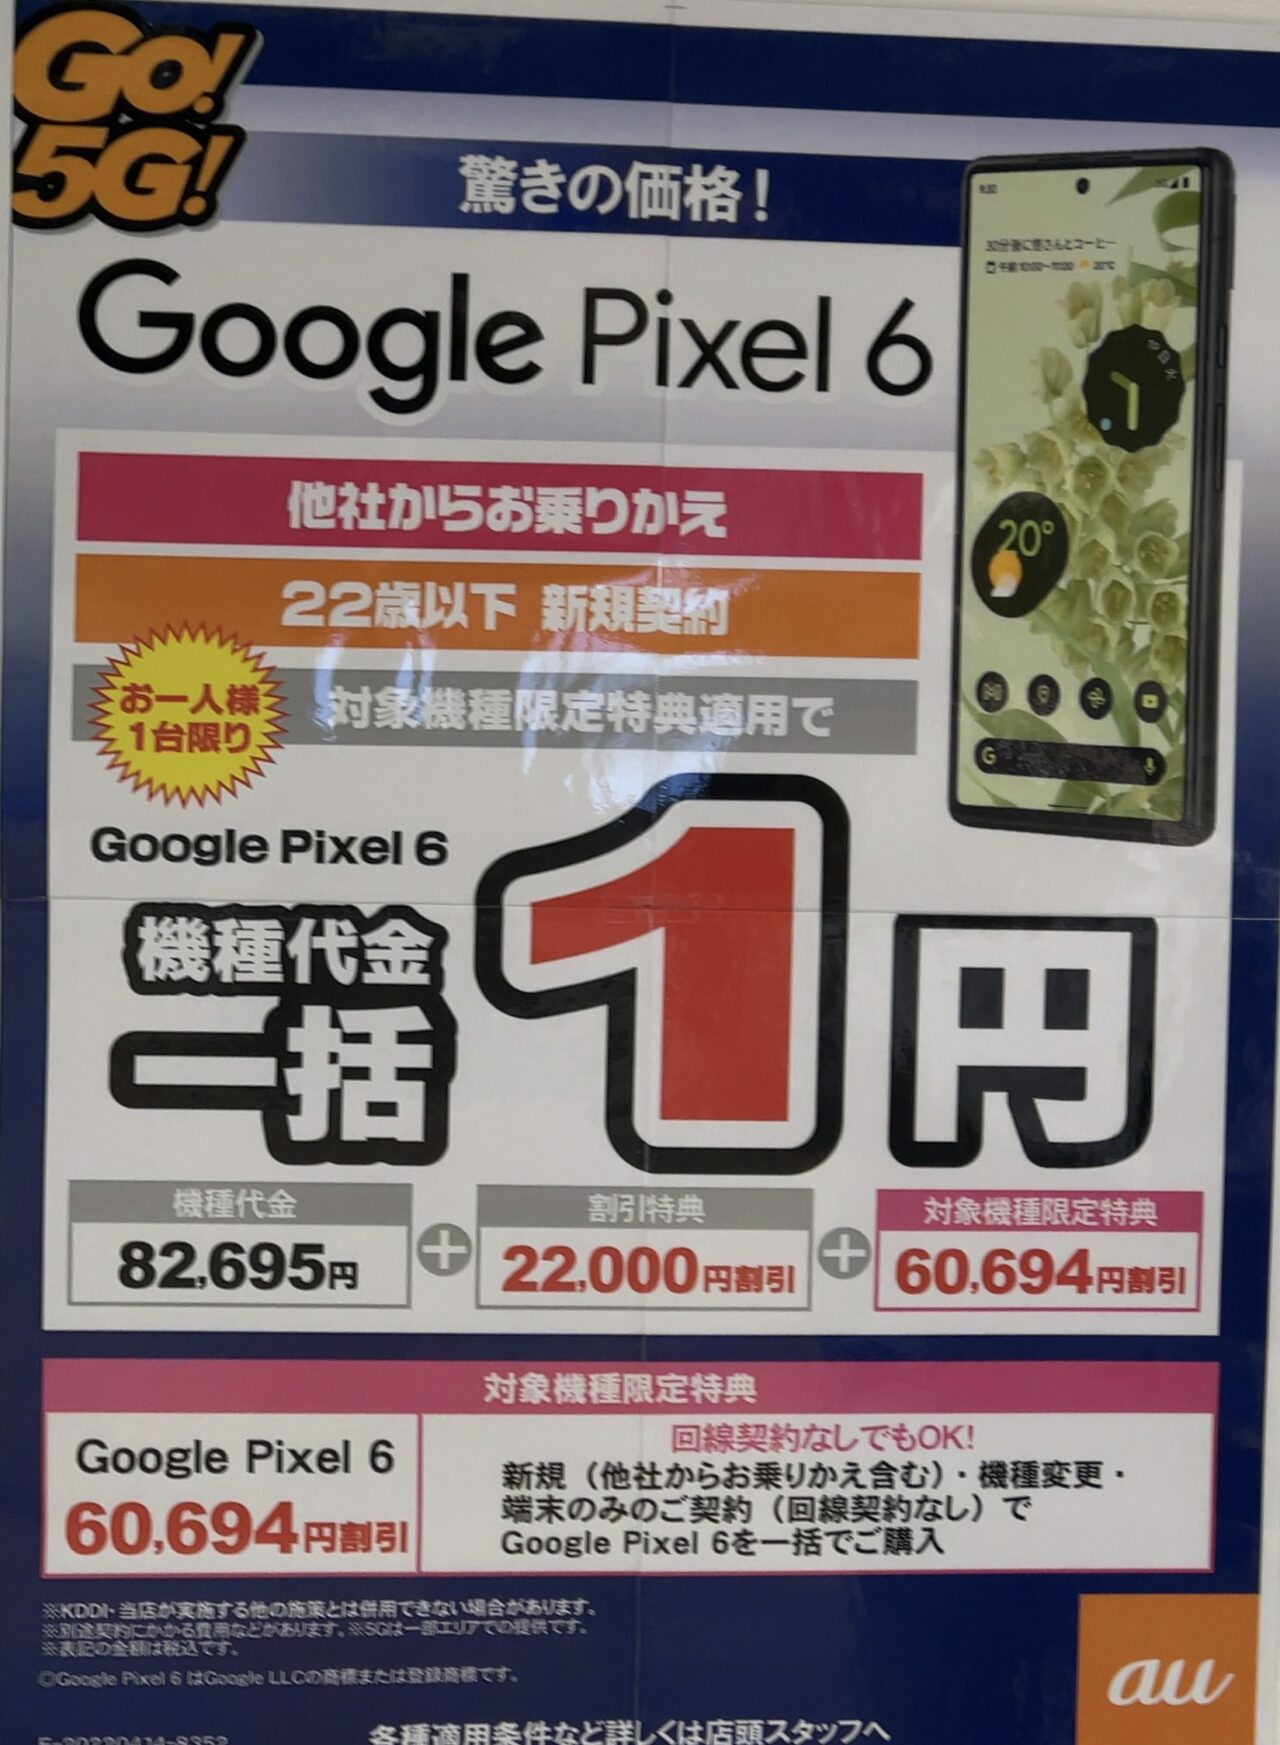 Google Pixel 6a 一括購入 残債なし - スマートフォン本体